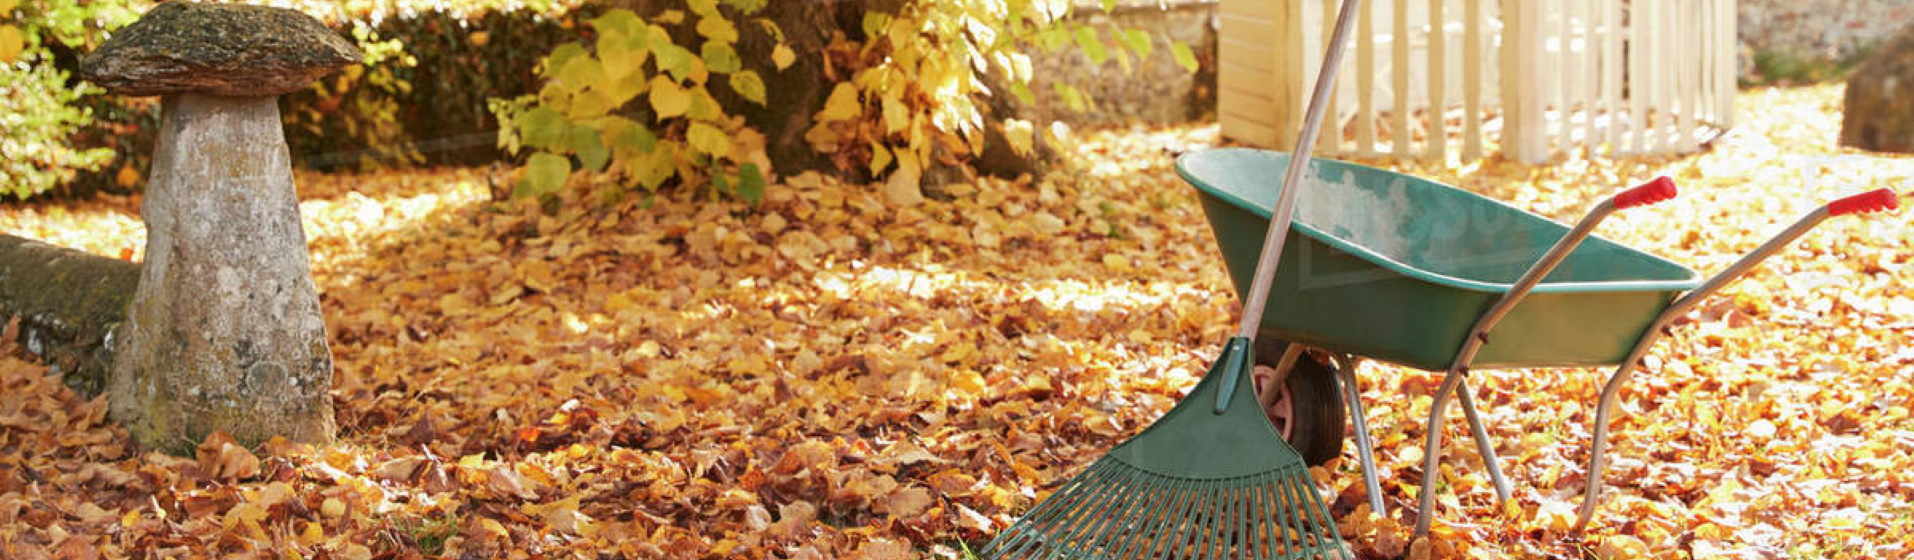 A green wheelbarrow is sitting on a pile of leaves in a winter garden.